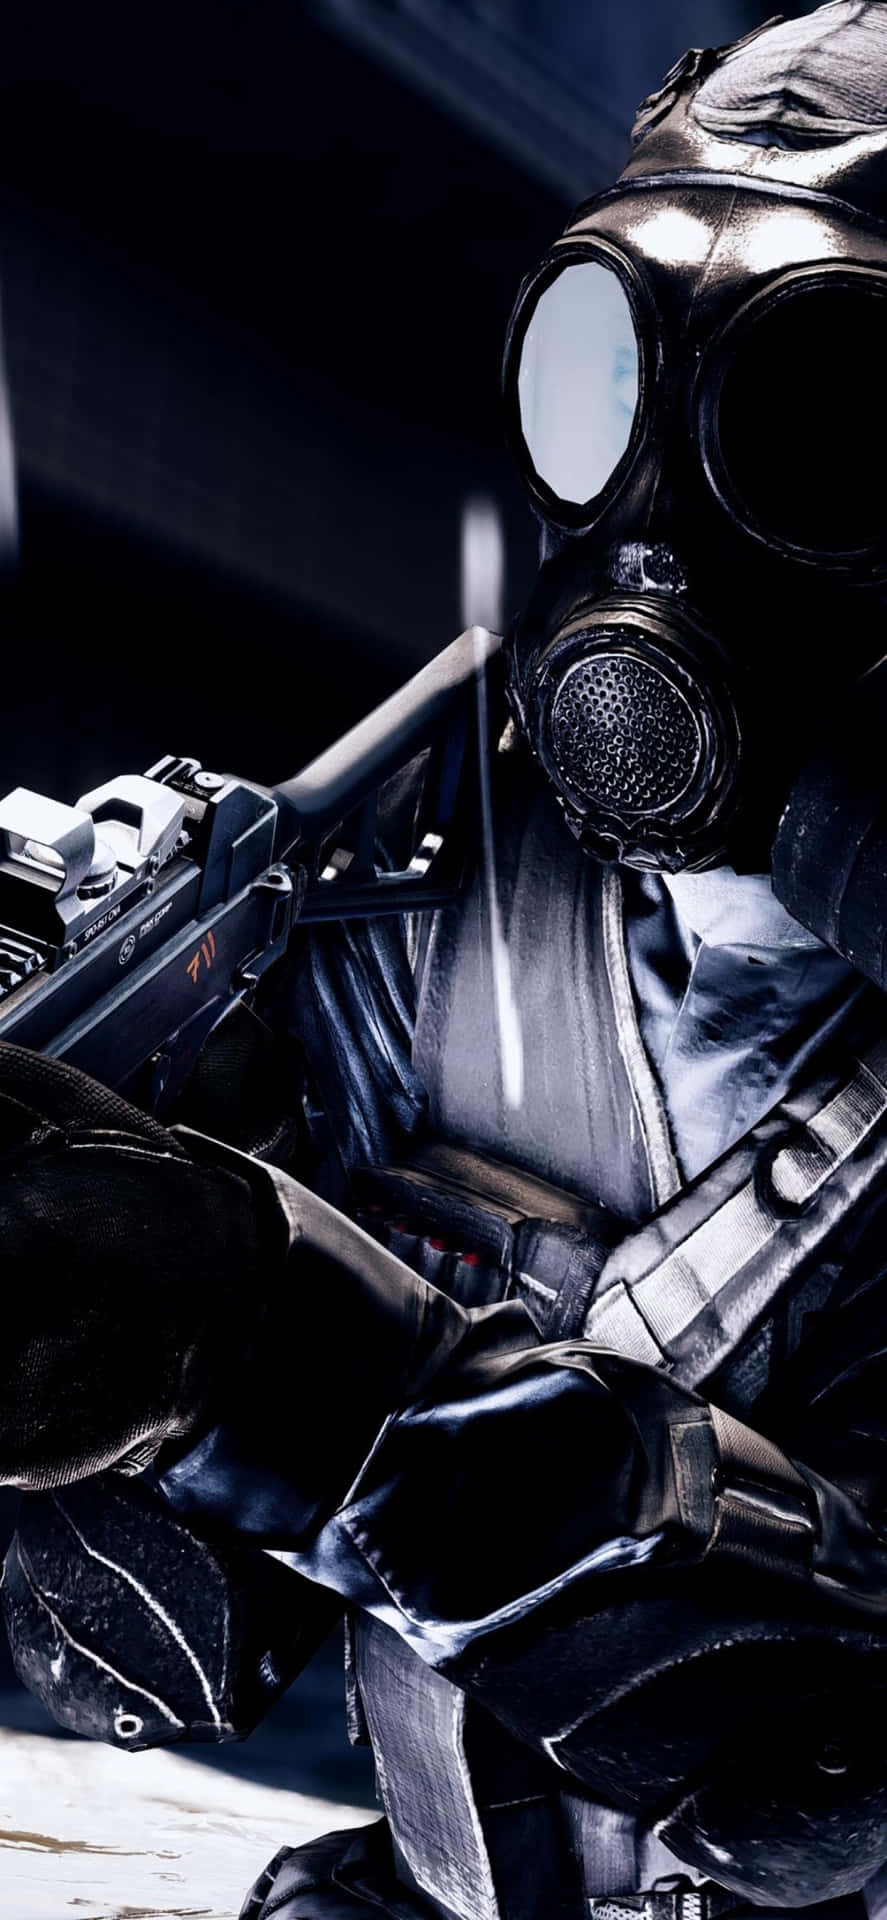 A Man In A Gas Mask Holding A Gun